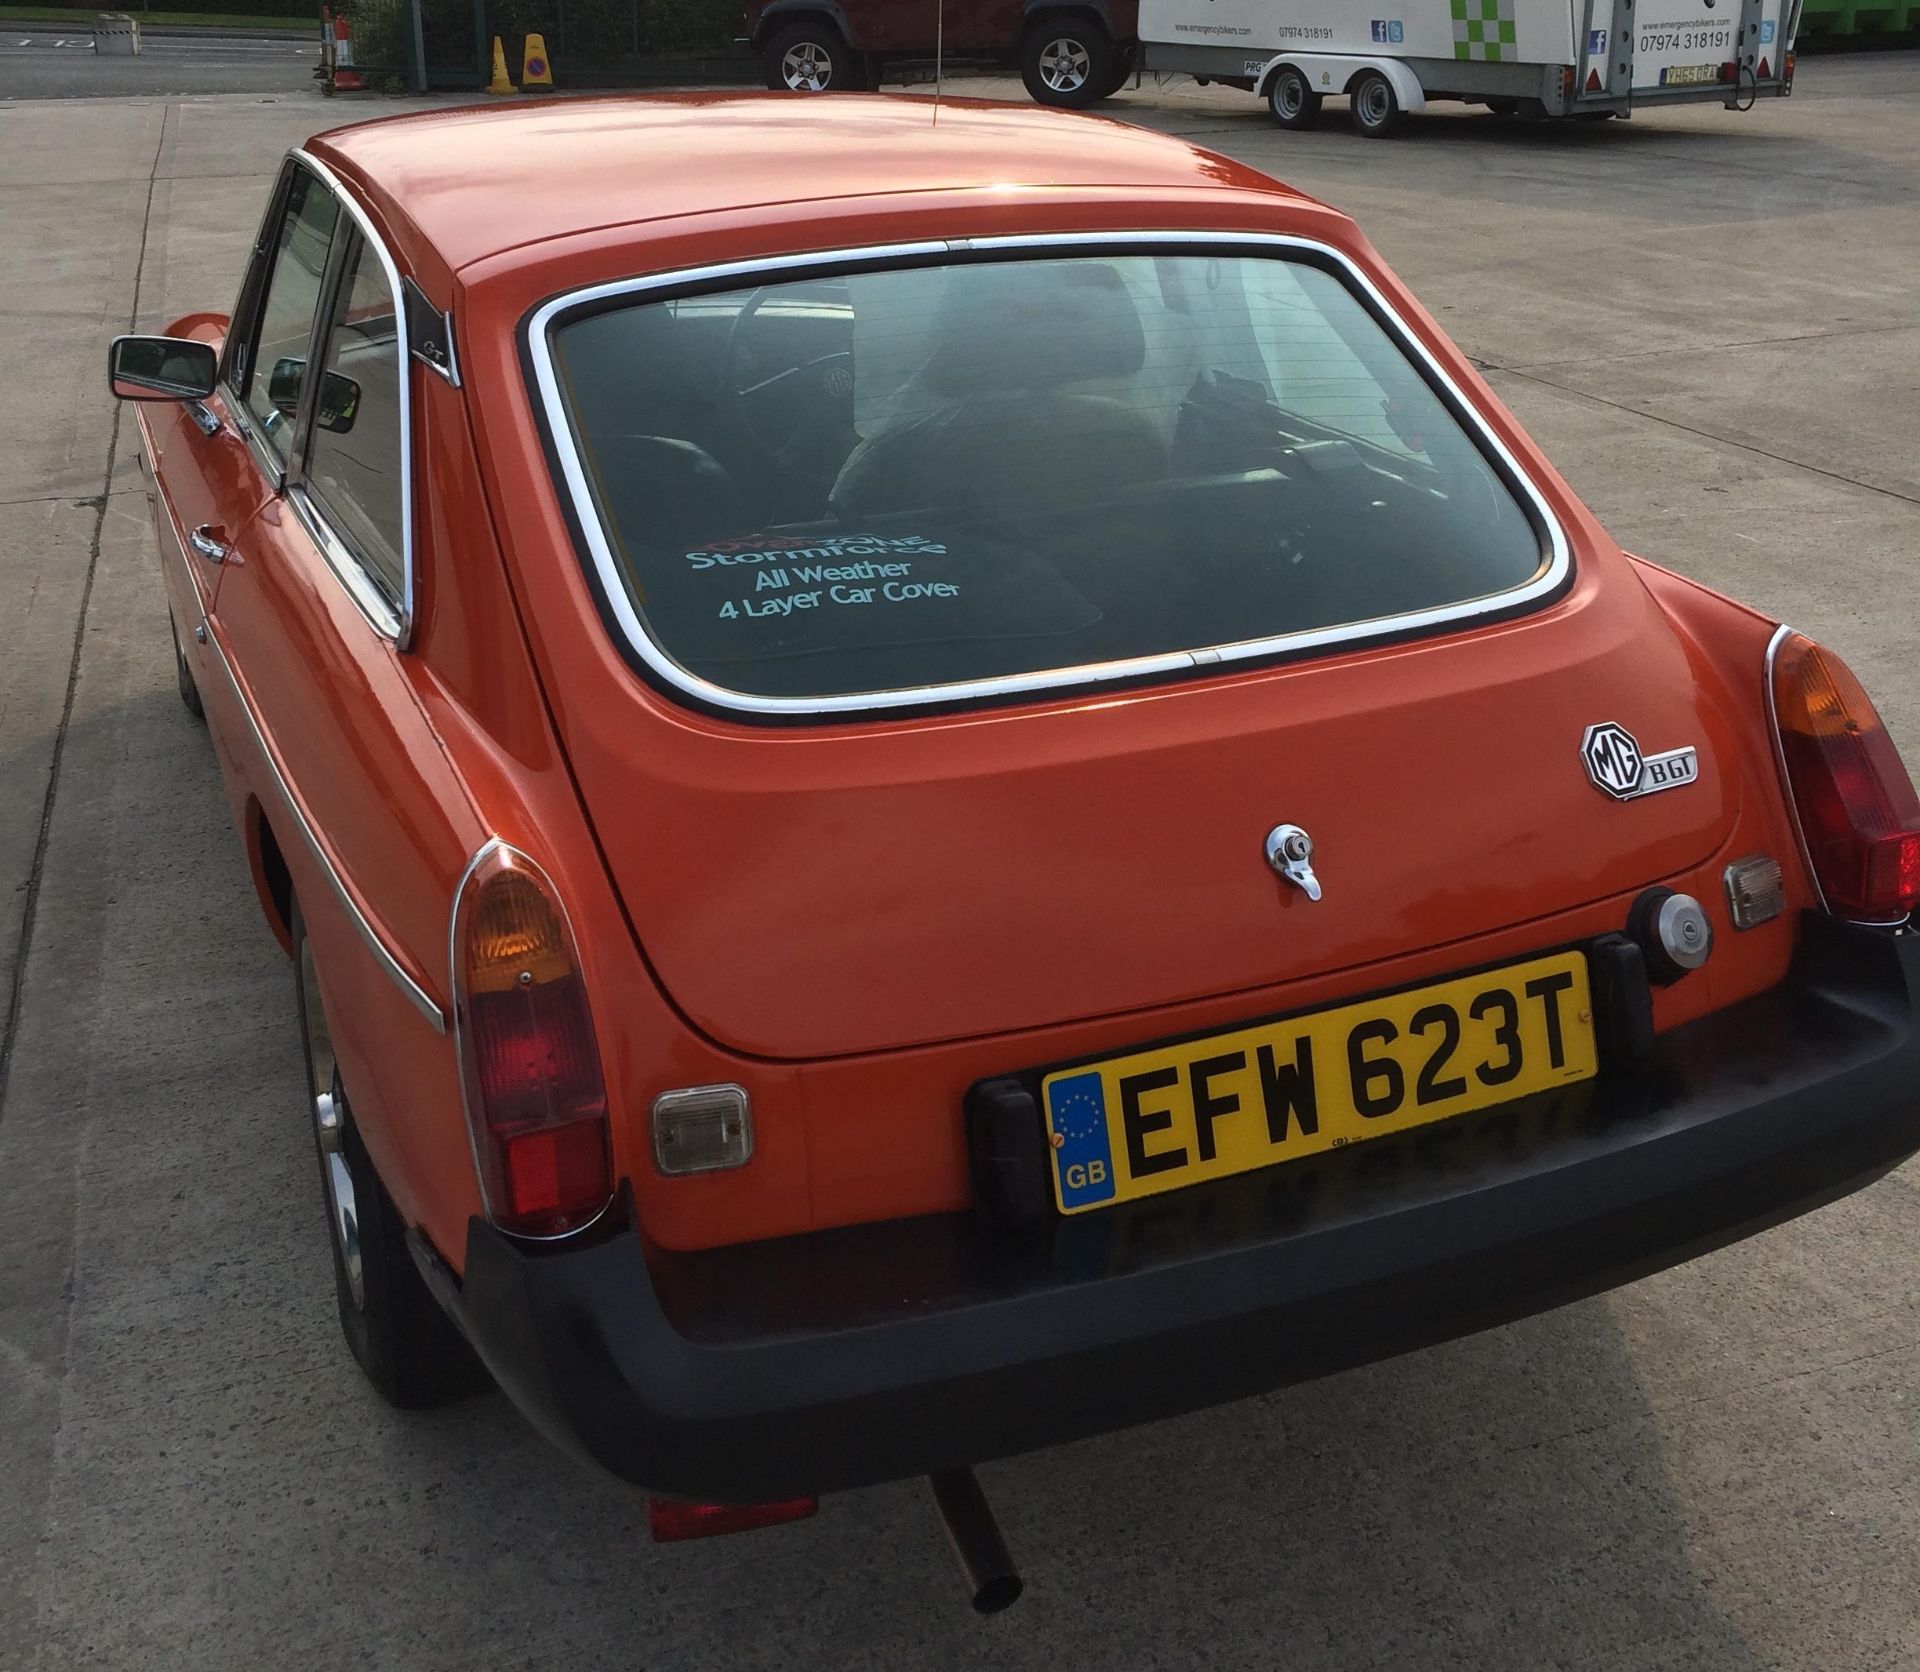 MGB GT 1.8 SPORTS HARD TOP - petrol - red Reg No EFW 623T Rec Mil 83,898 Date of last MOT: 21.2. - Image 19 of 25